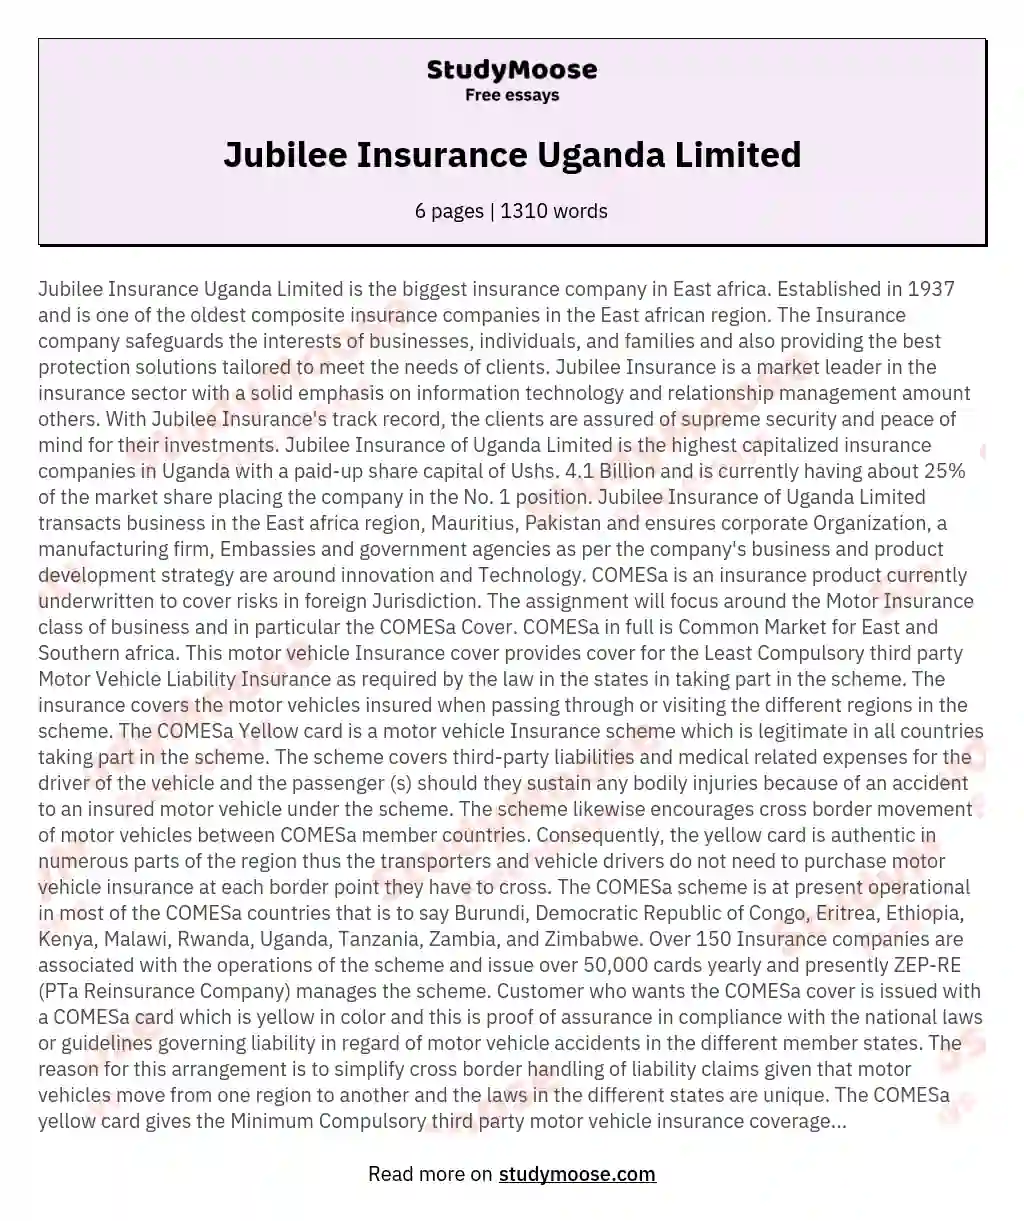 Jubilee Insurance Uganda Limited essay